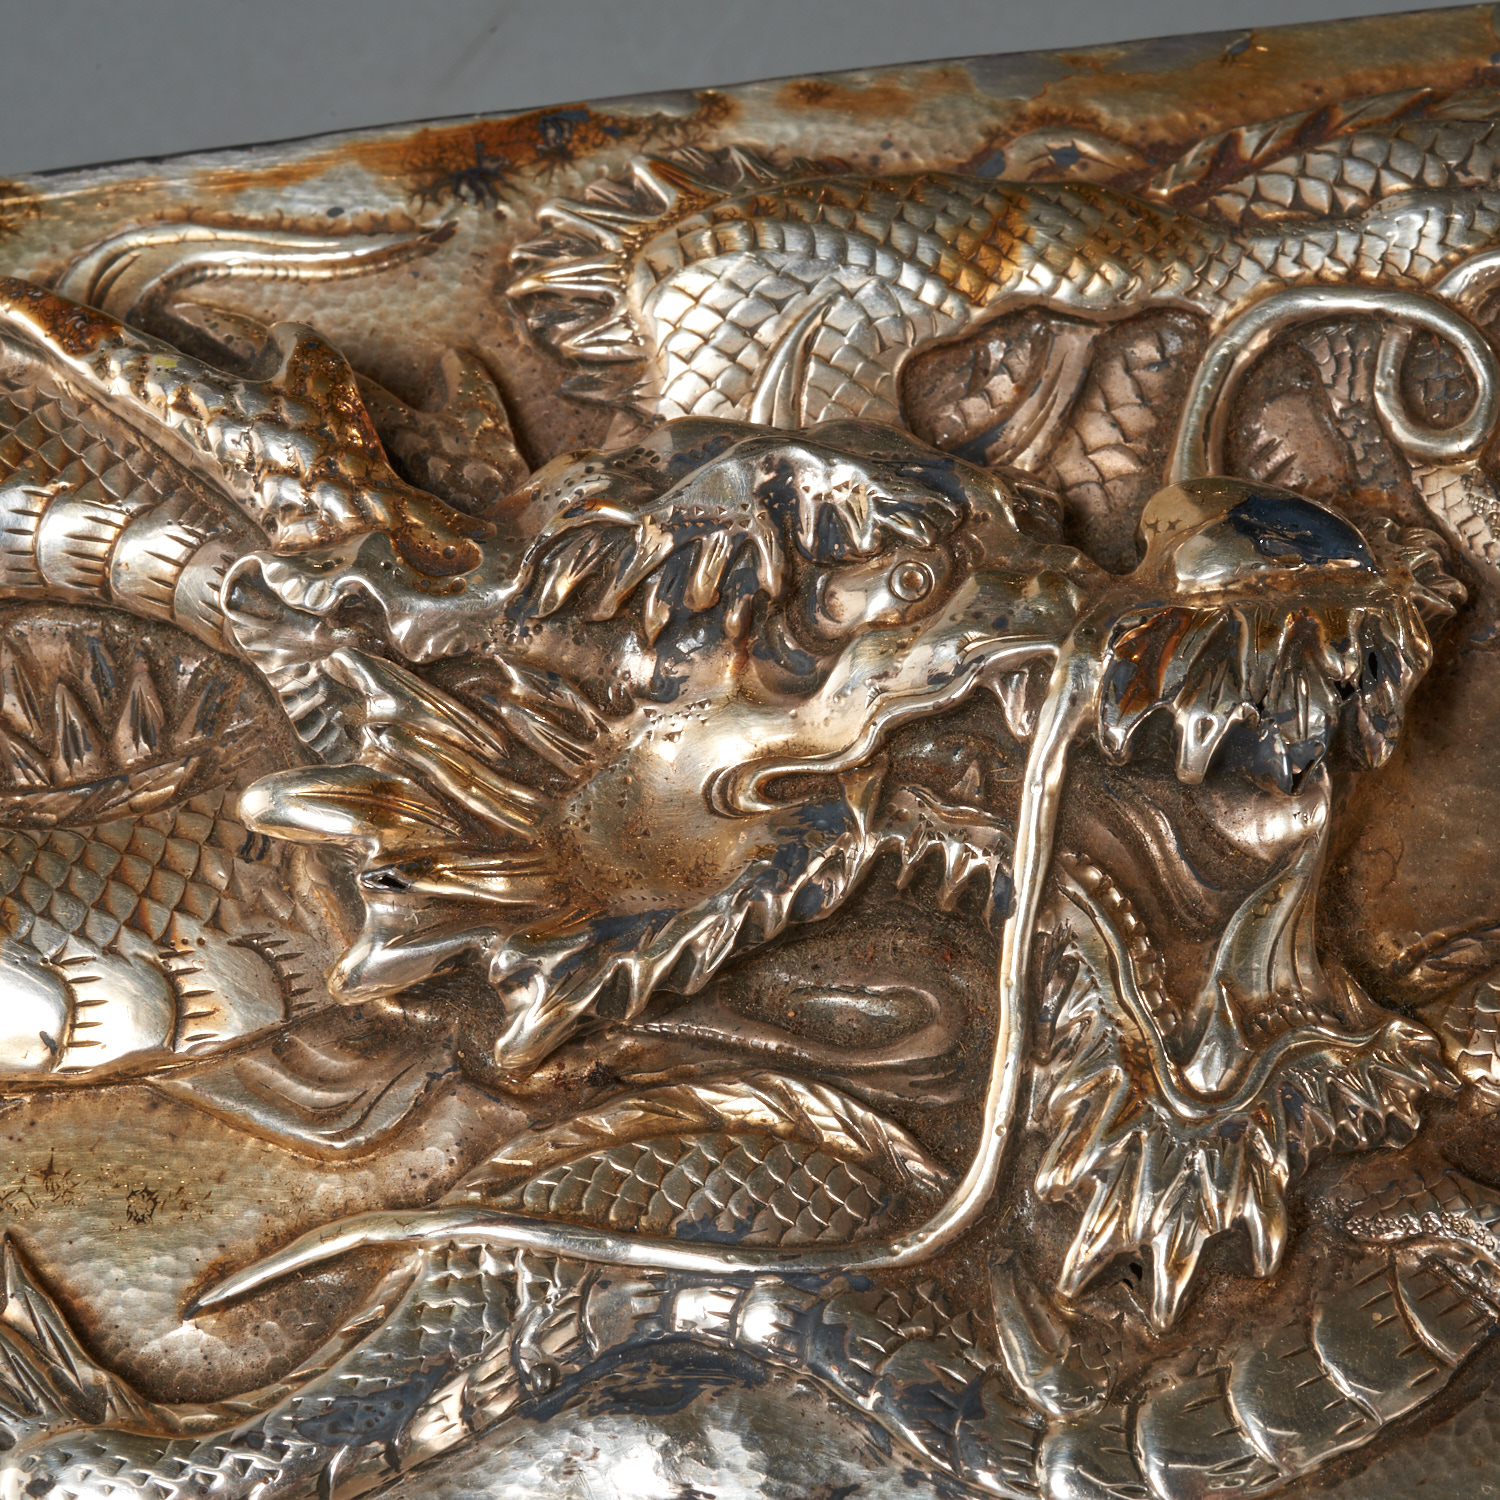 Kuhn & Komor Asian Export silver dragon box - Image 3 of 8